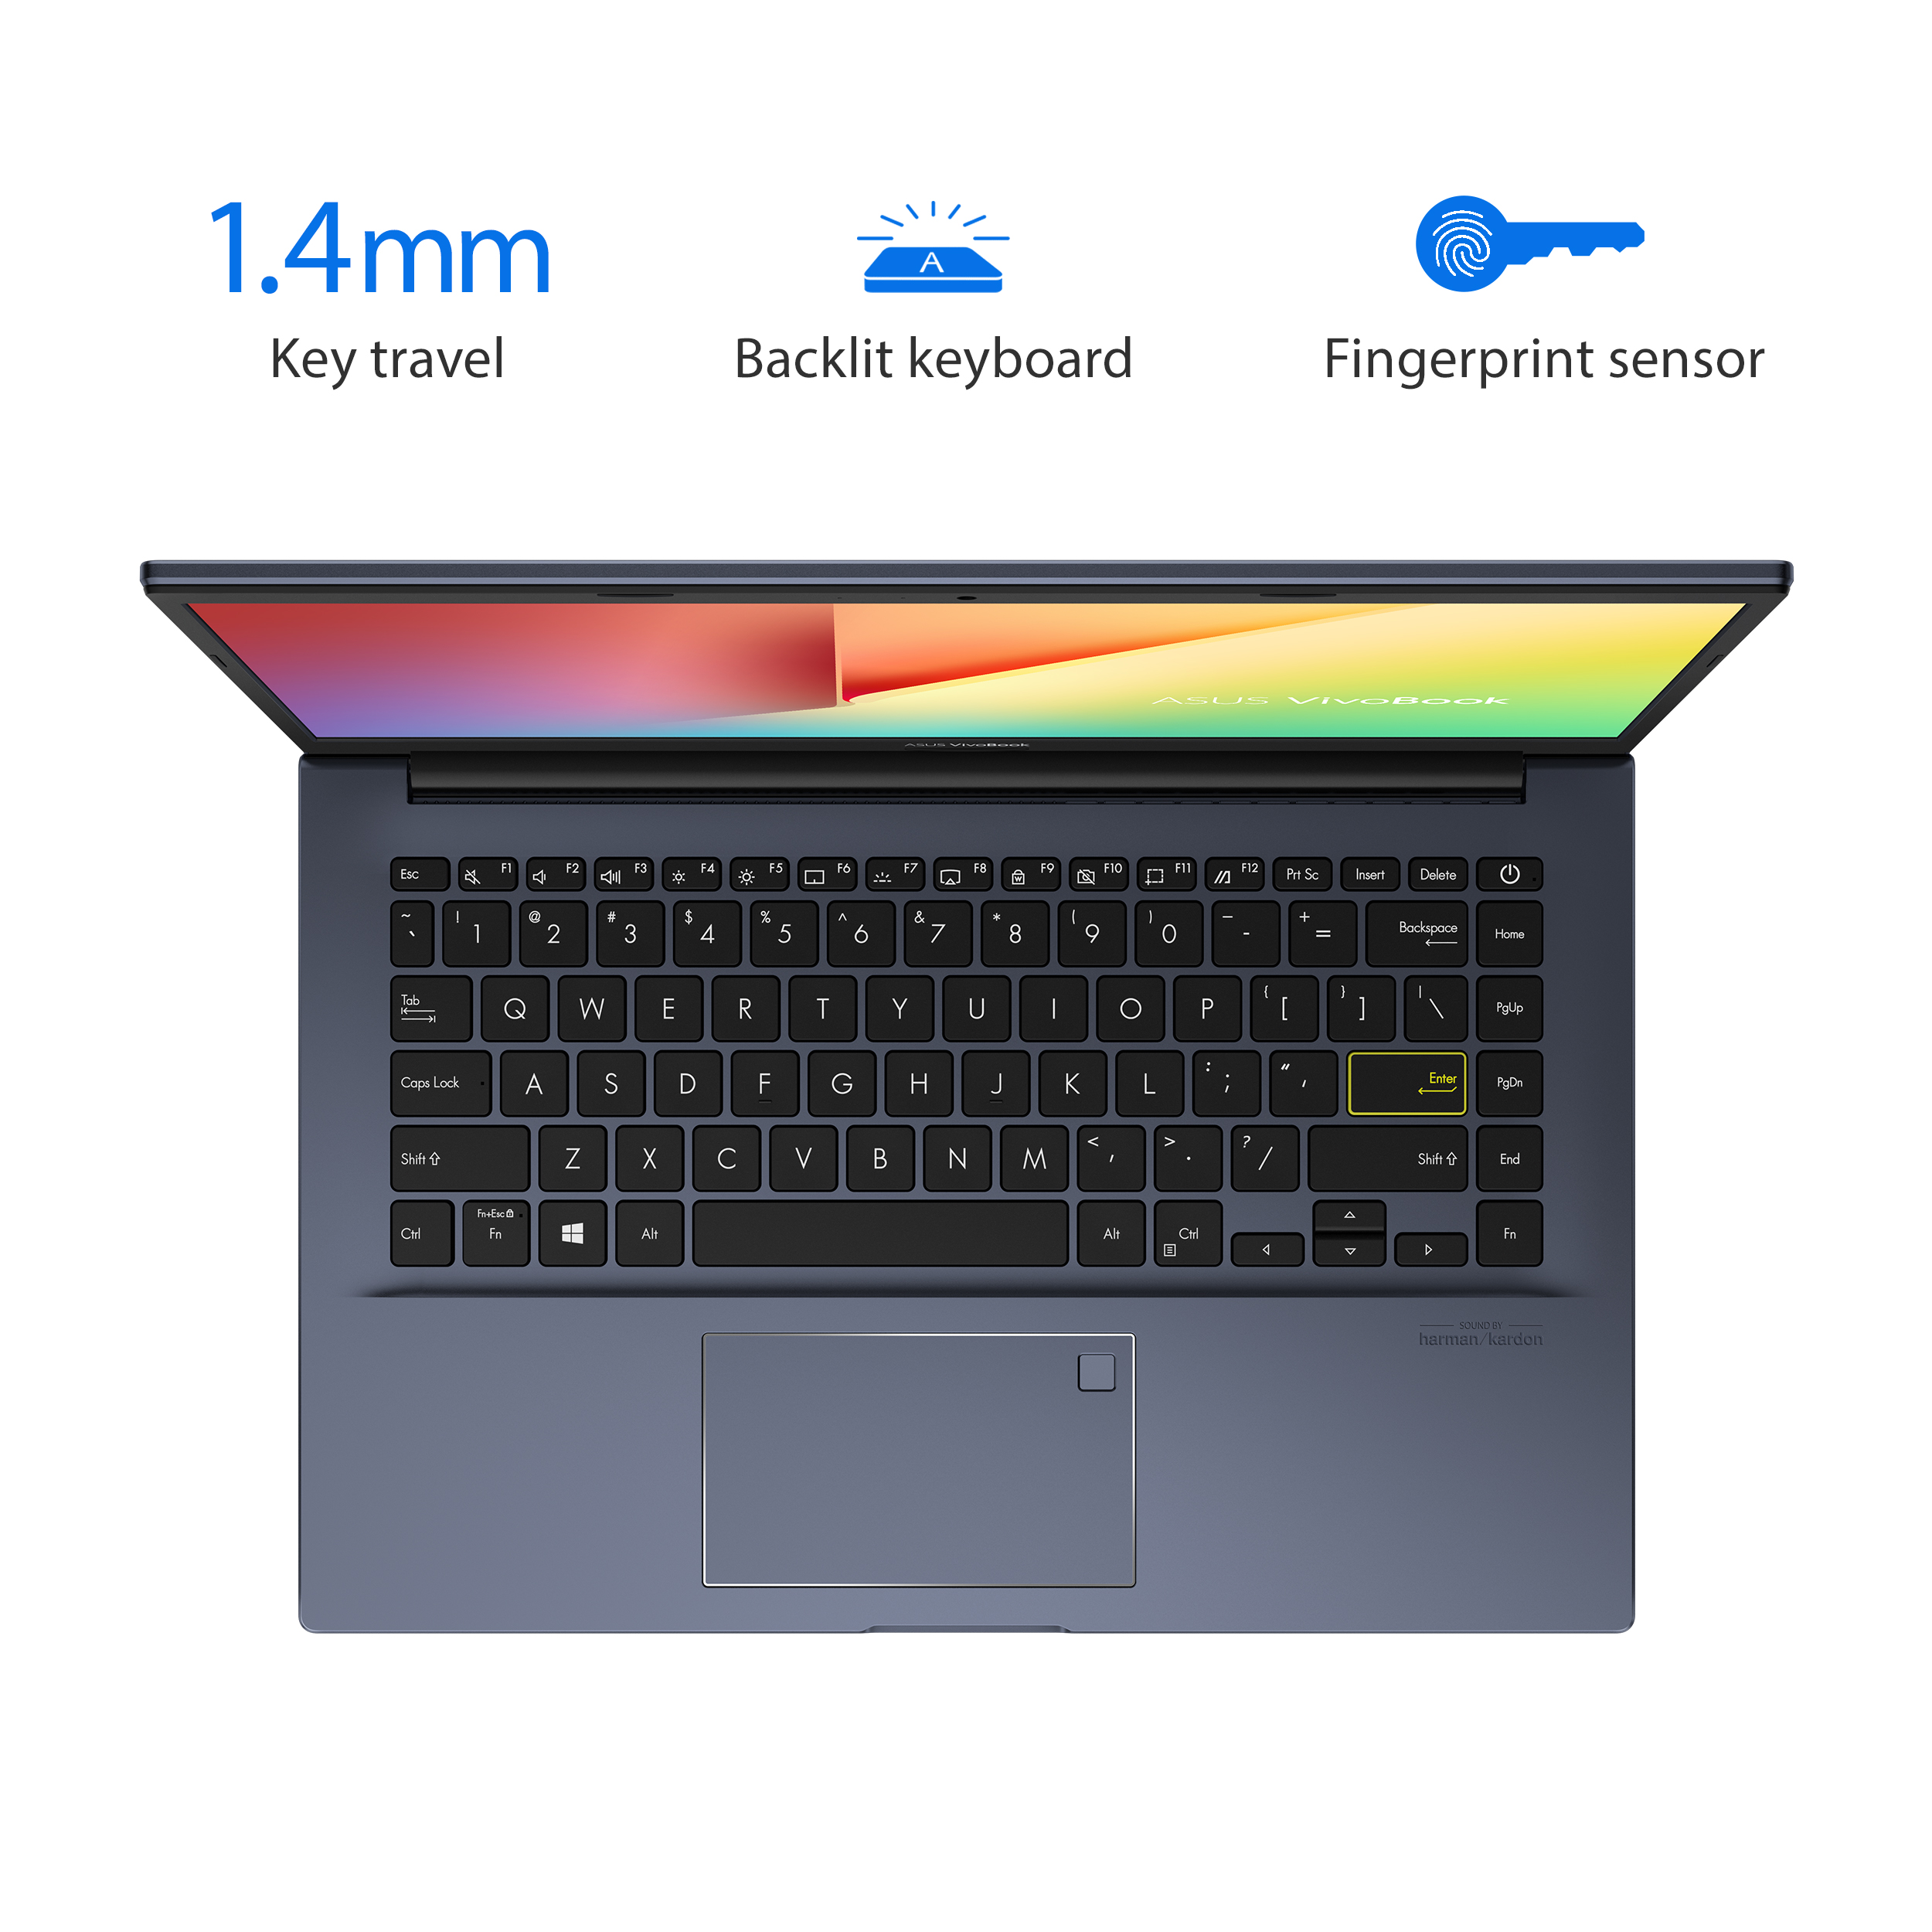 Asus VivoBook 14 Premium Thin and Light Laptop 14” FHD Display AMD 4-Core Ryzen 5 3500U 8GB DDR4 256GB SSD Backlit Keyboard Fingerprint USB-C HDMI Wifi6 Harman Win10 - image 3 of 6